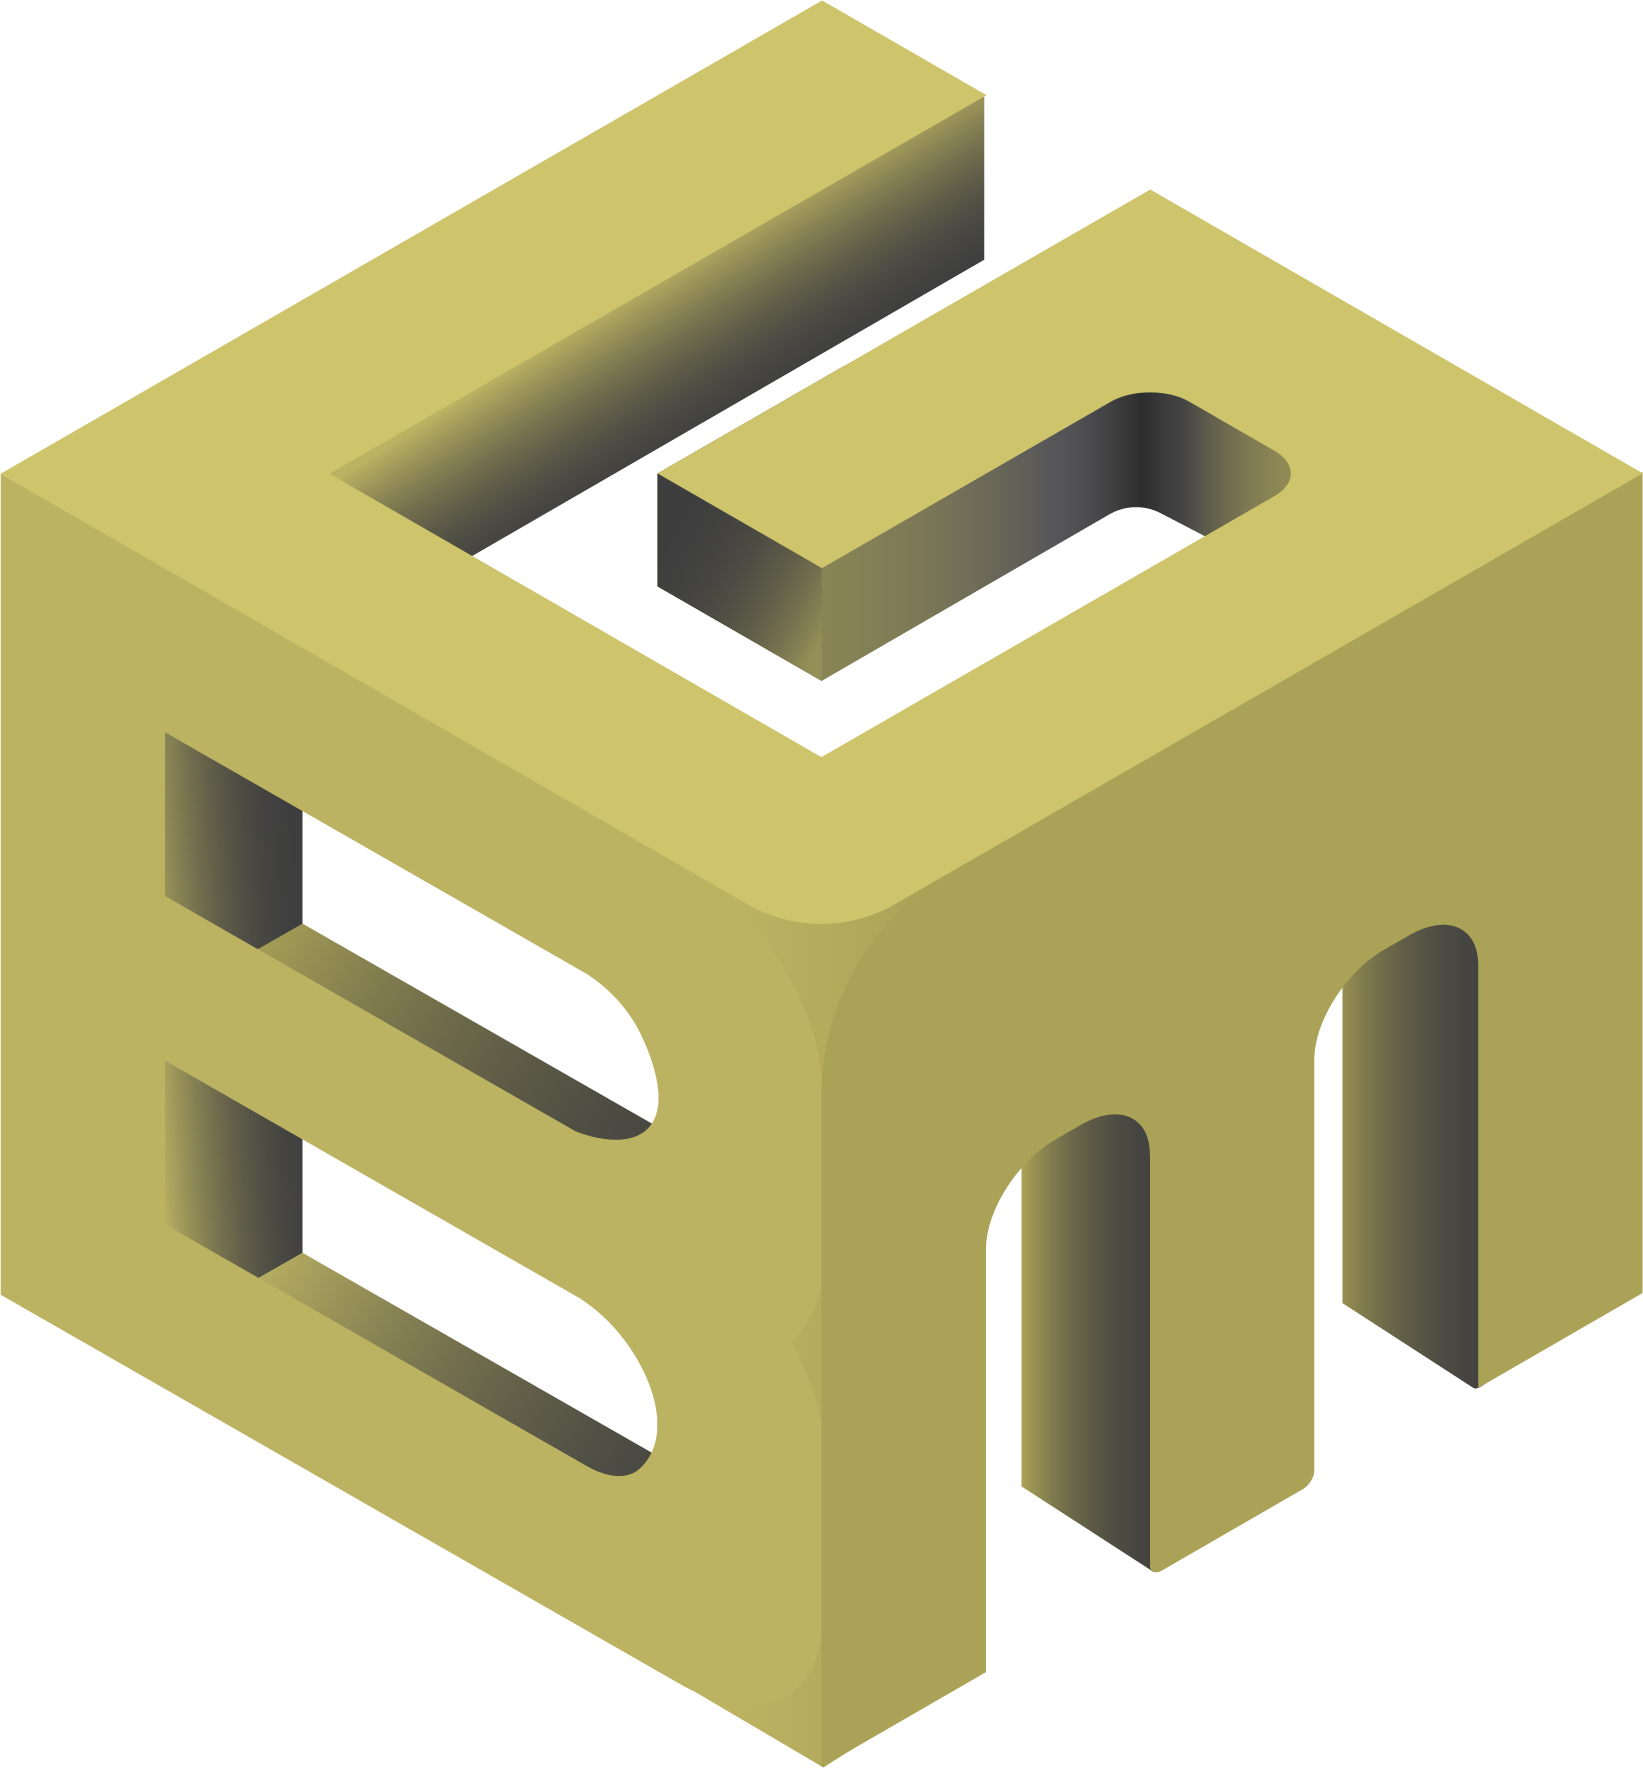 BMG cube gold